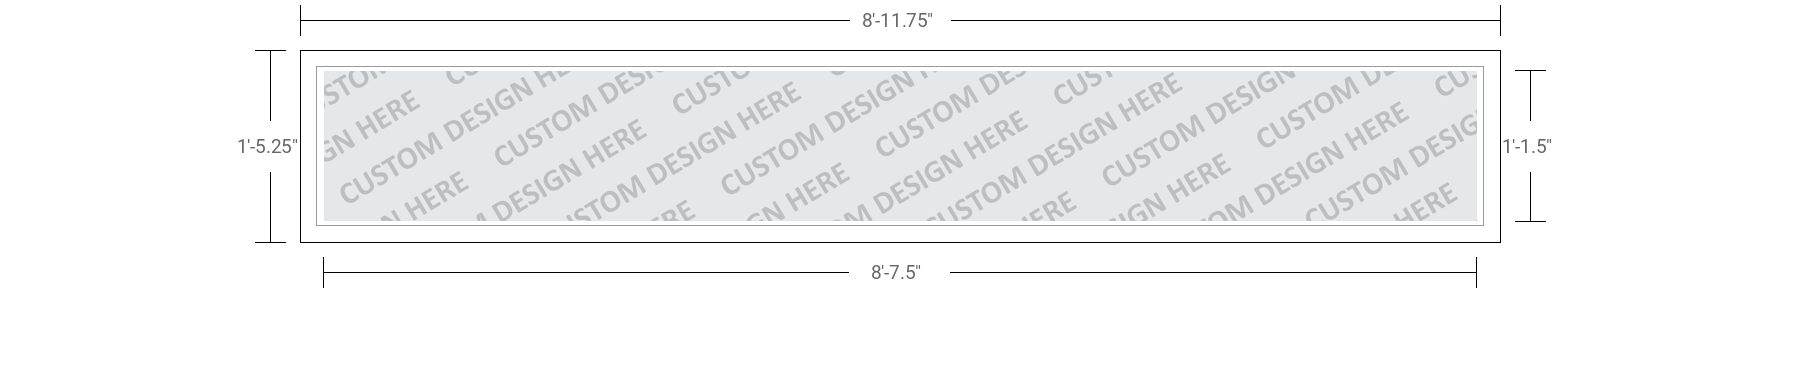 1.5' x 9' Digital Print Pan Formed Single Sign Face